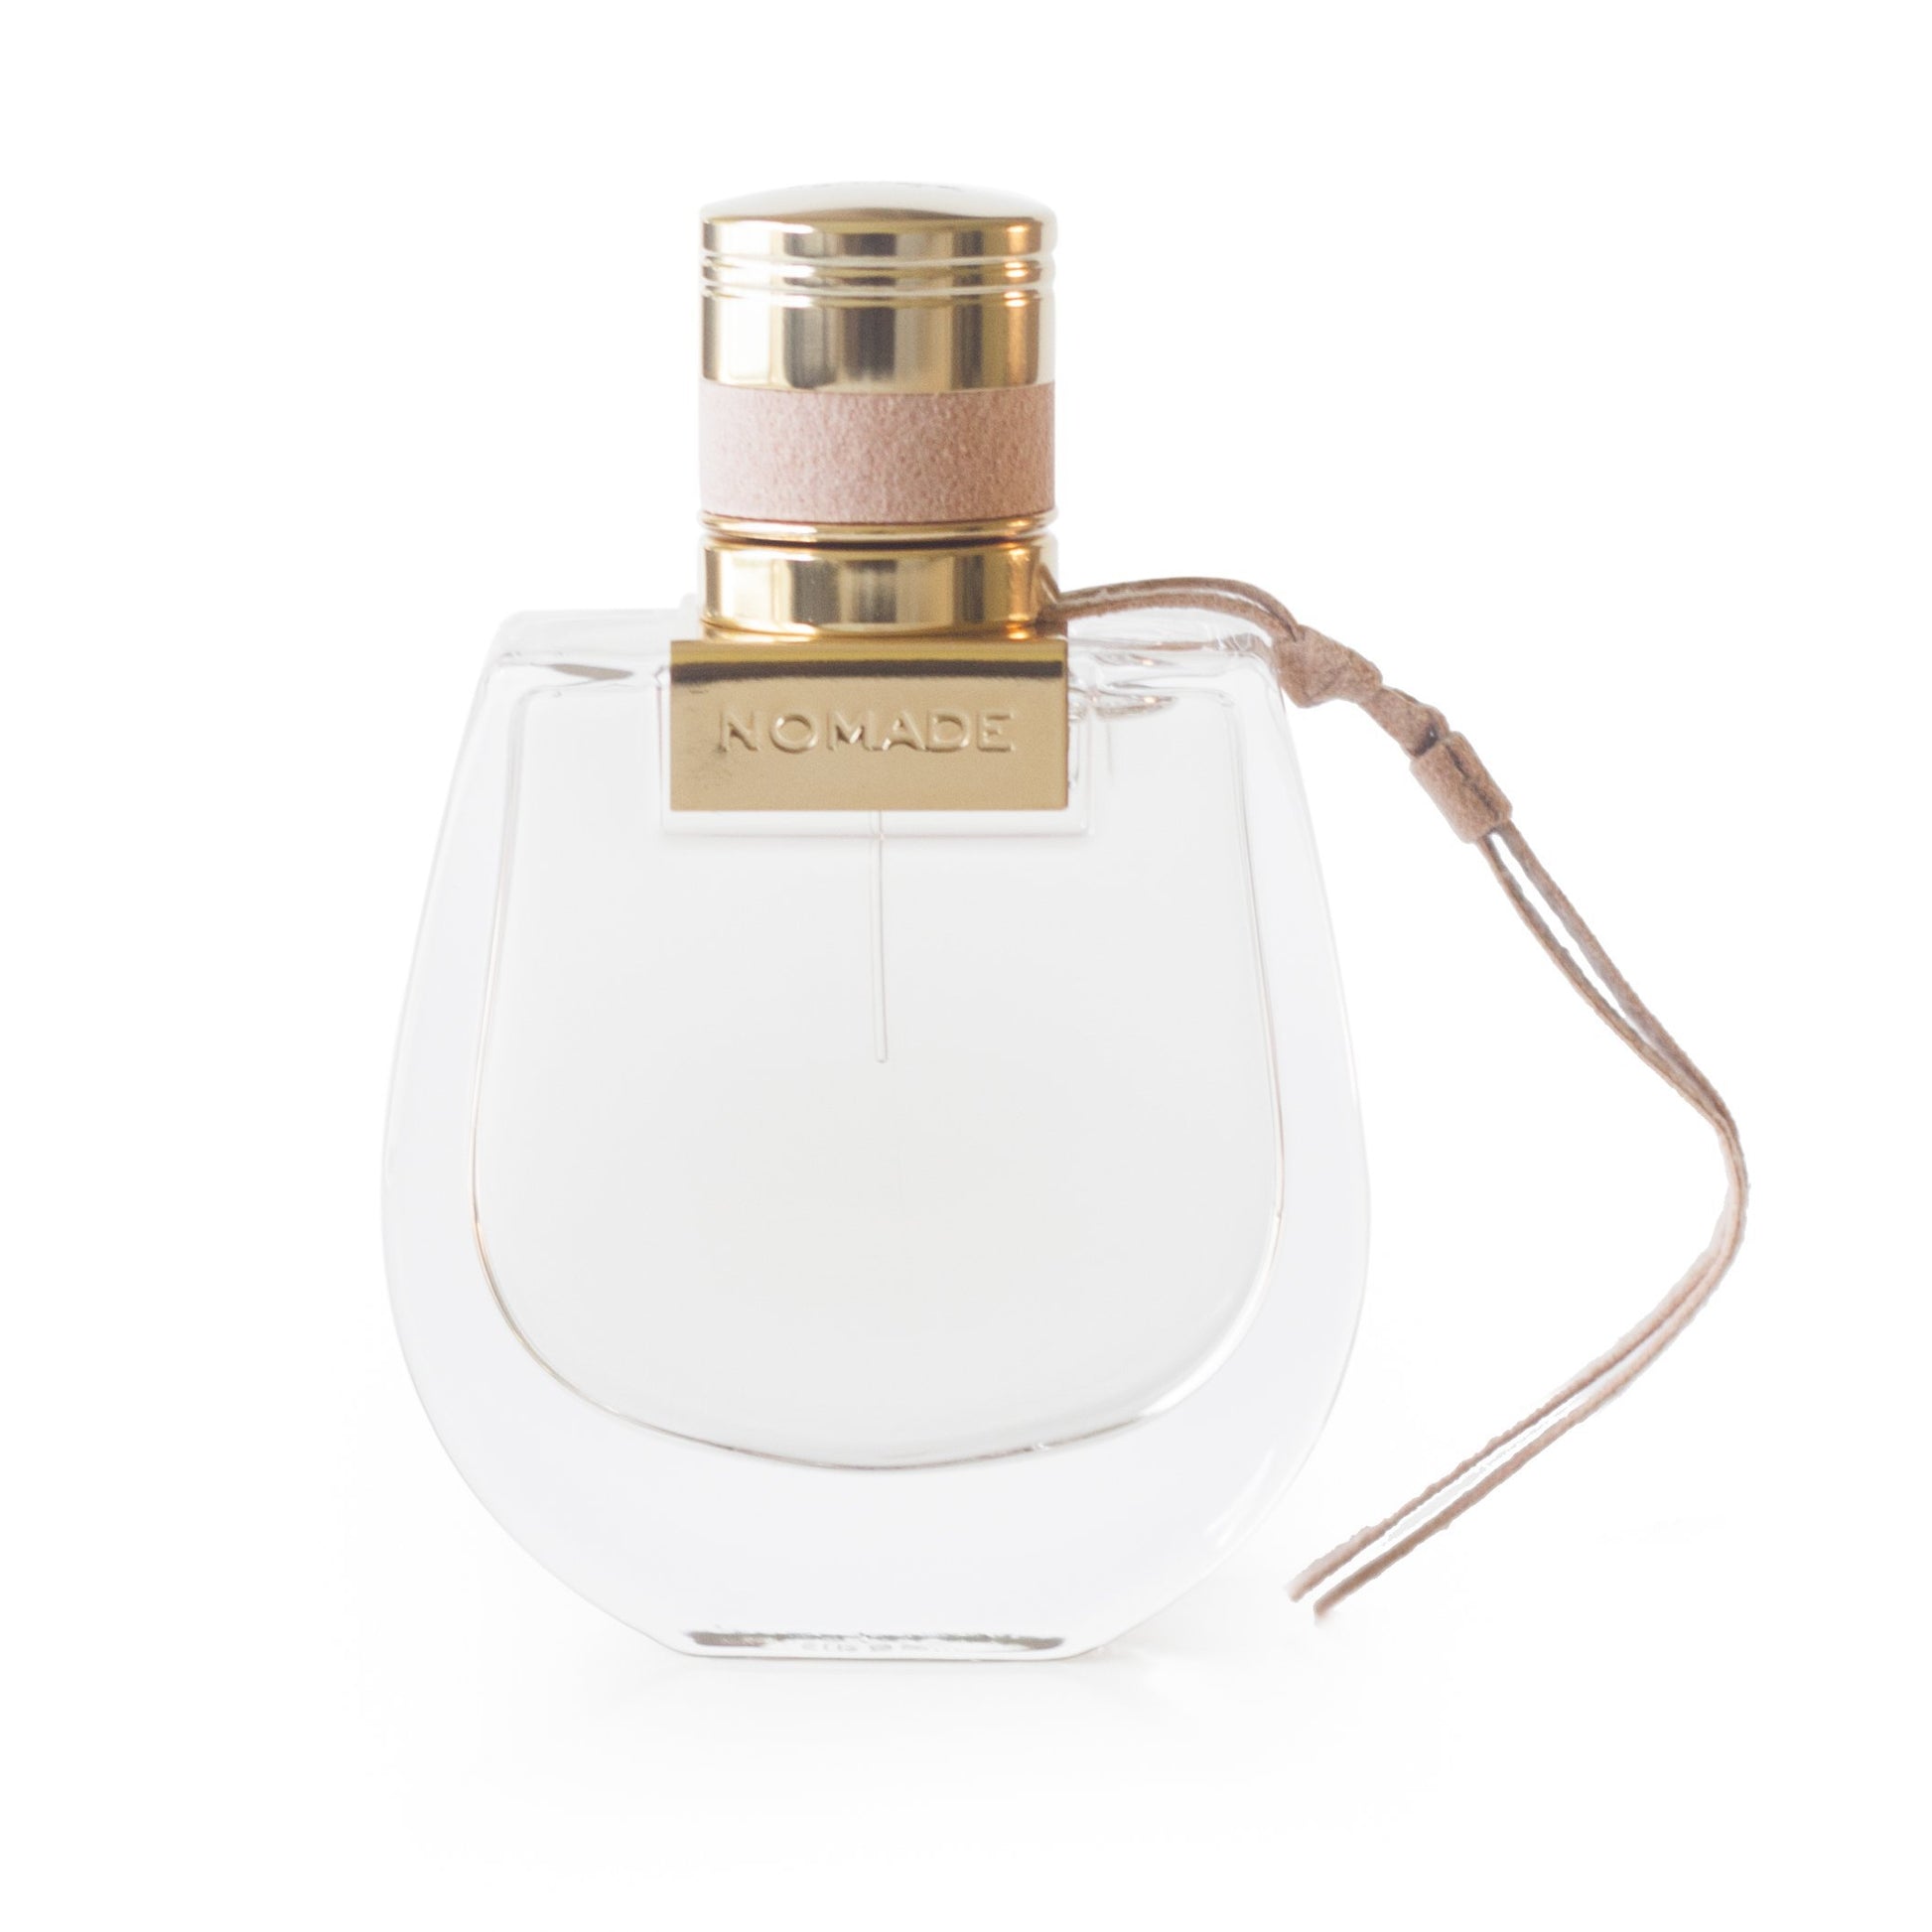 Nomade Eau de Parfum Spray for Women by Chloe, Product image 2